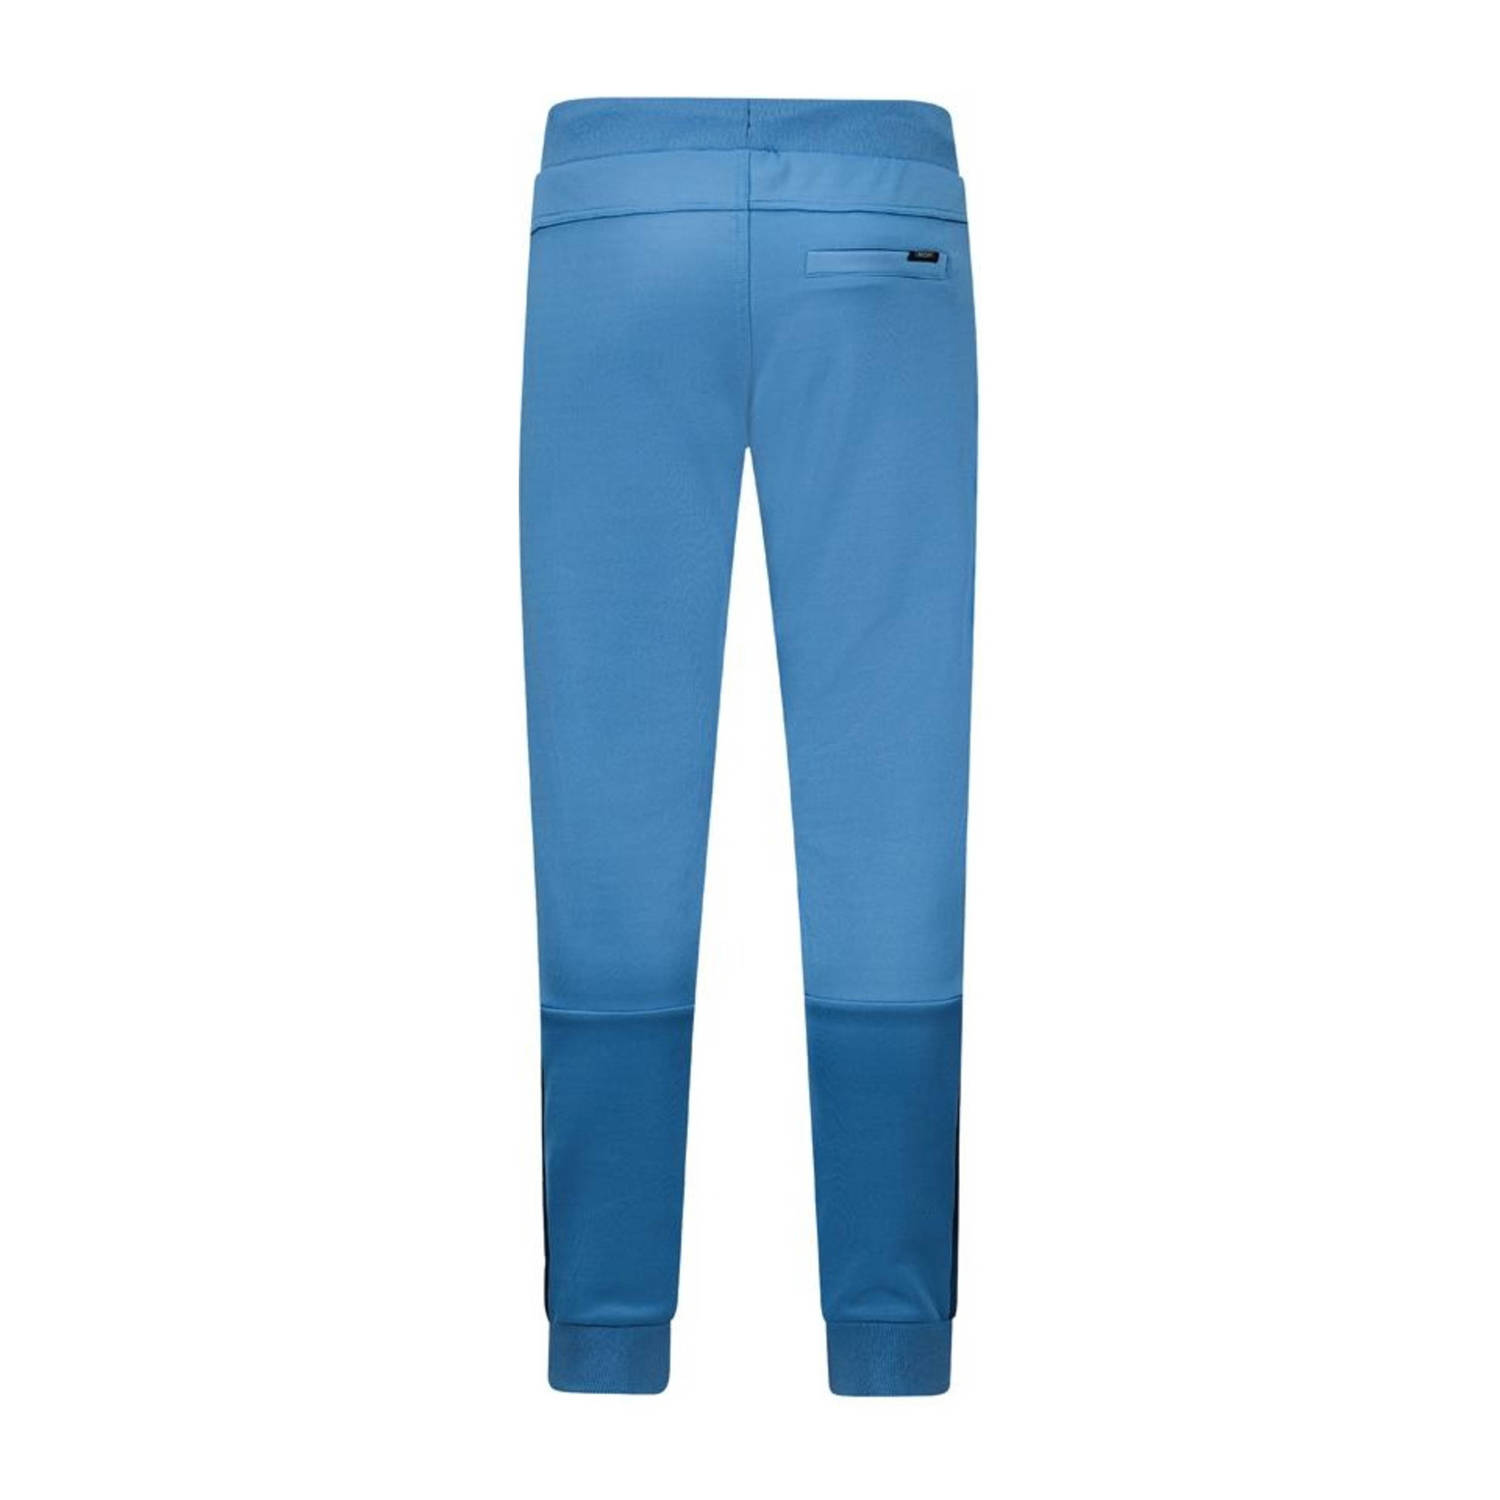 Retour Jeans Retour X Touzani slim fit joggingbroek Ditch blauw donkerblauw